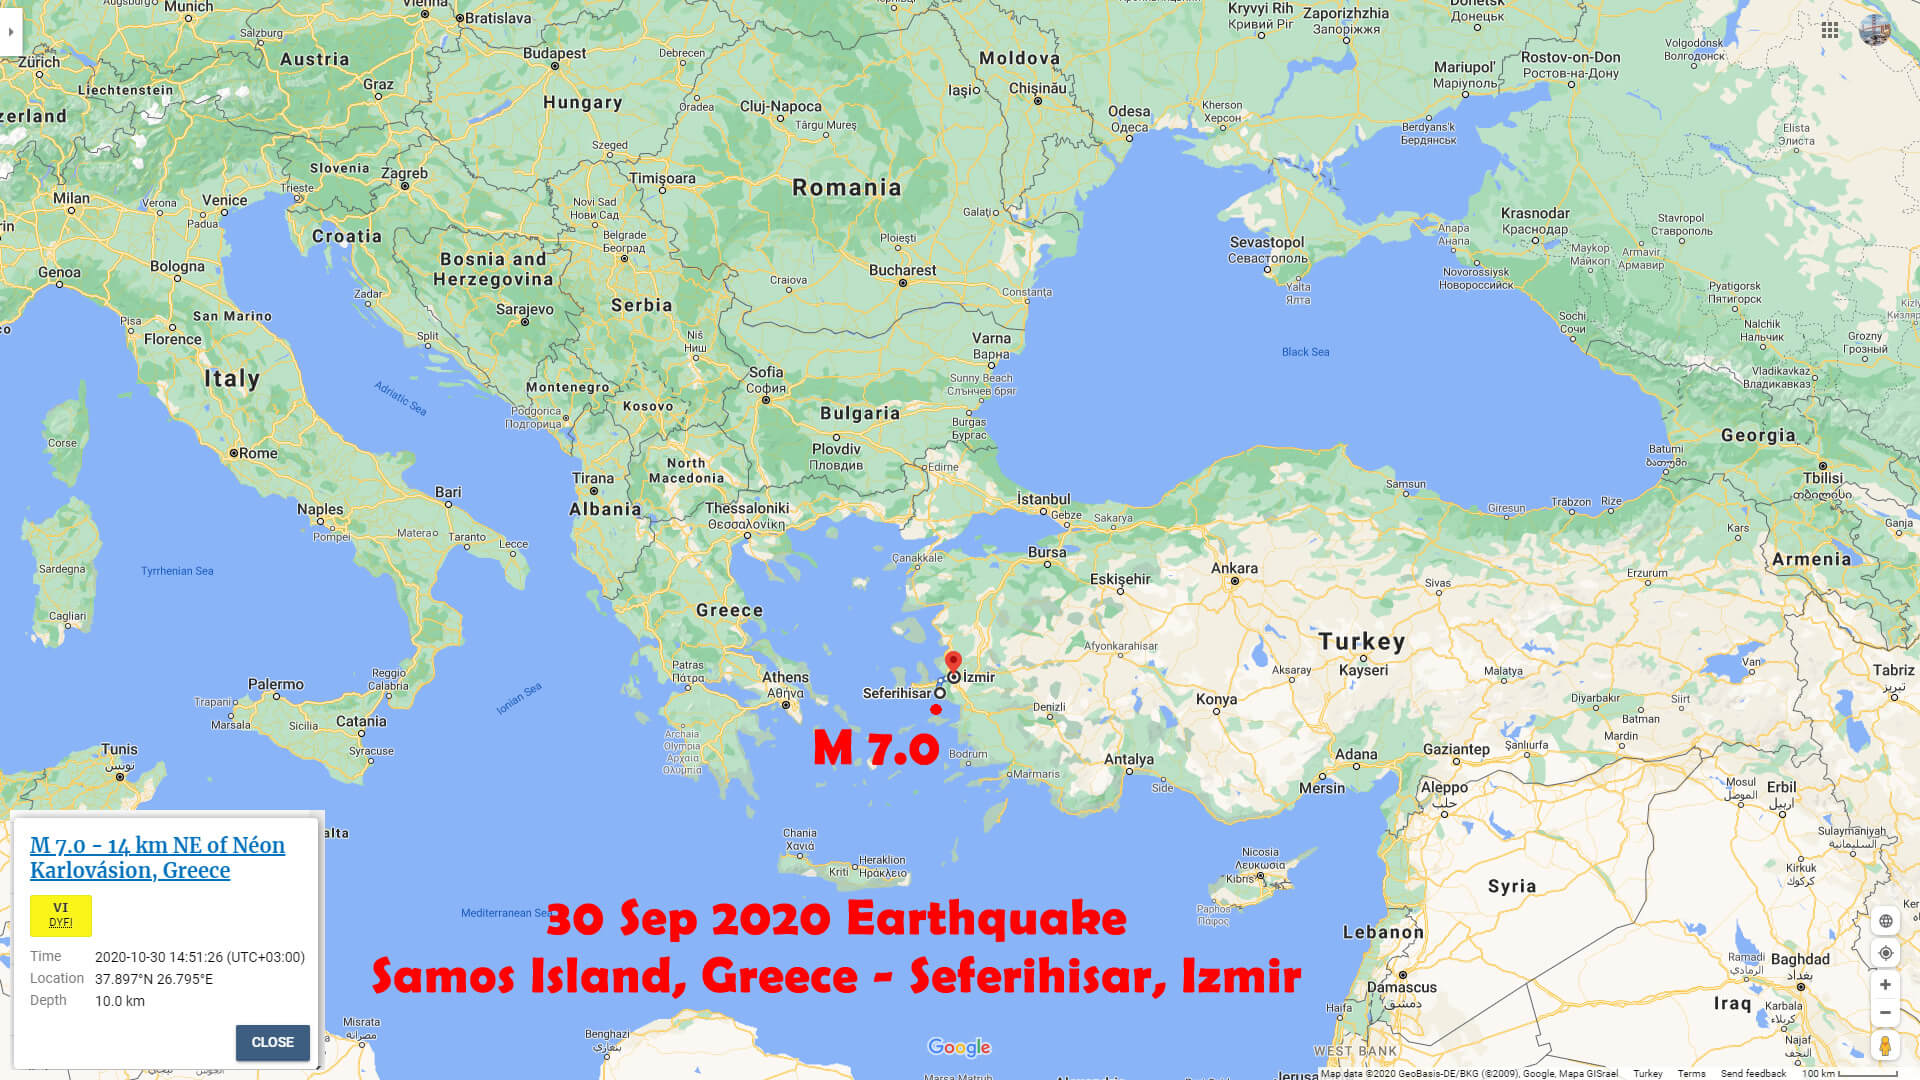 Samos Greece - Seferihisar Izmir - Sep 30 Earthquake Political Map